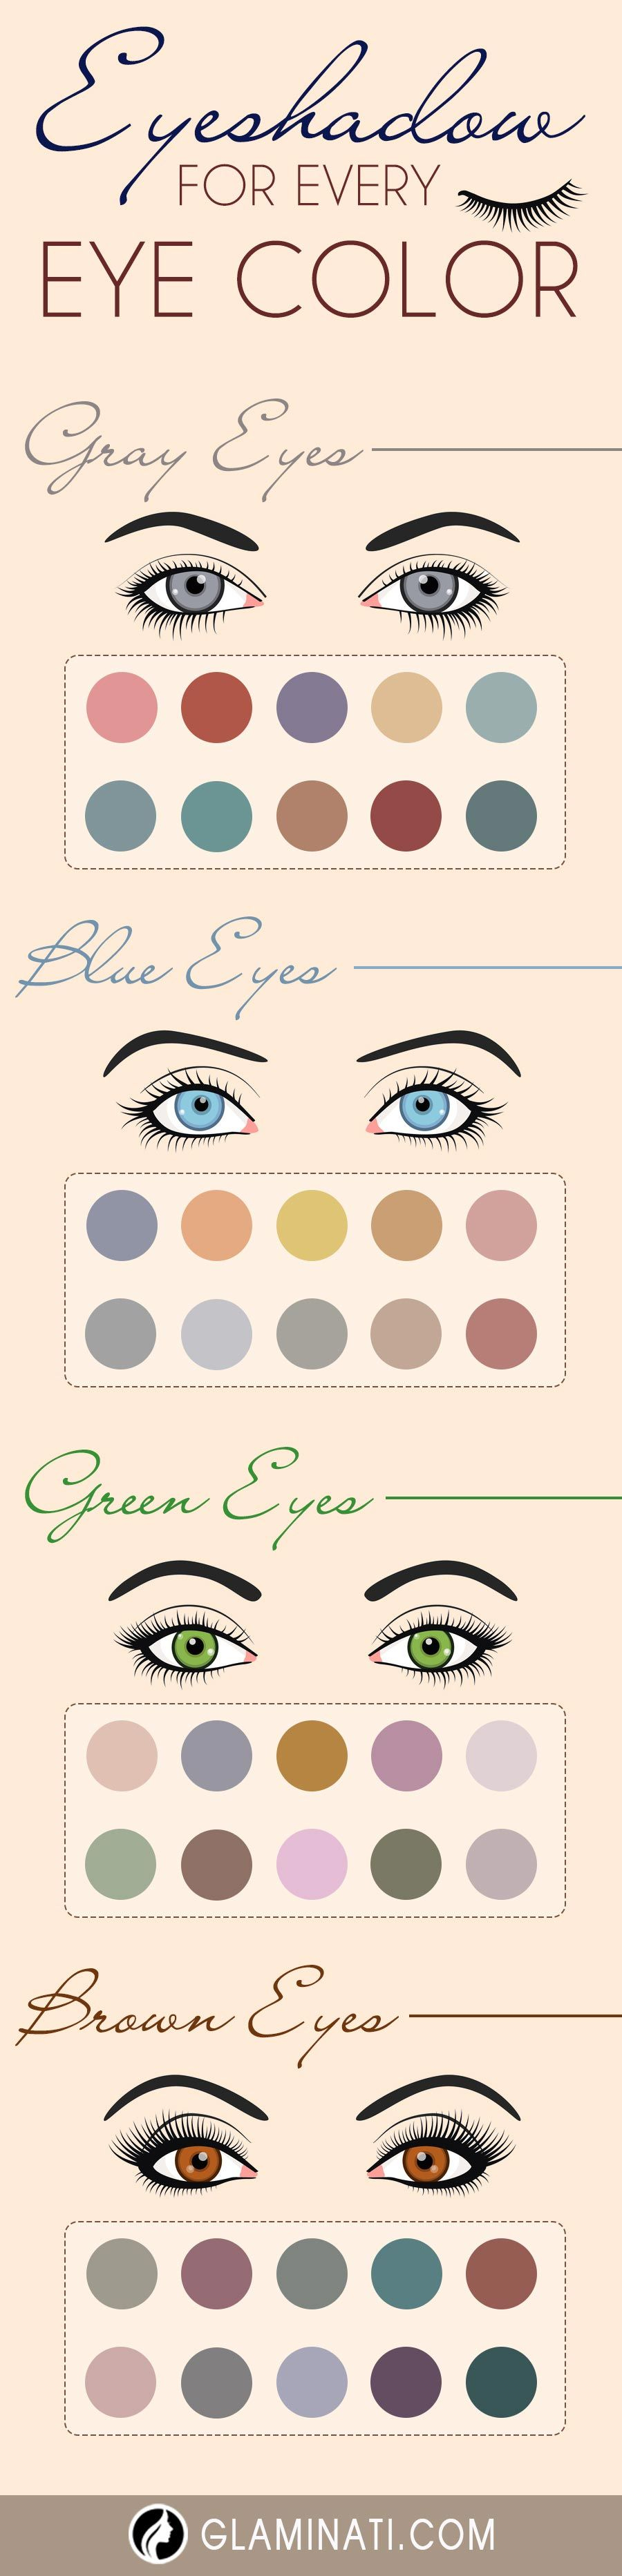 Eye Makeup For Grey Eyes 33 Most Magical Makeup Ideas For Gray Eyes Makeup Makeup